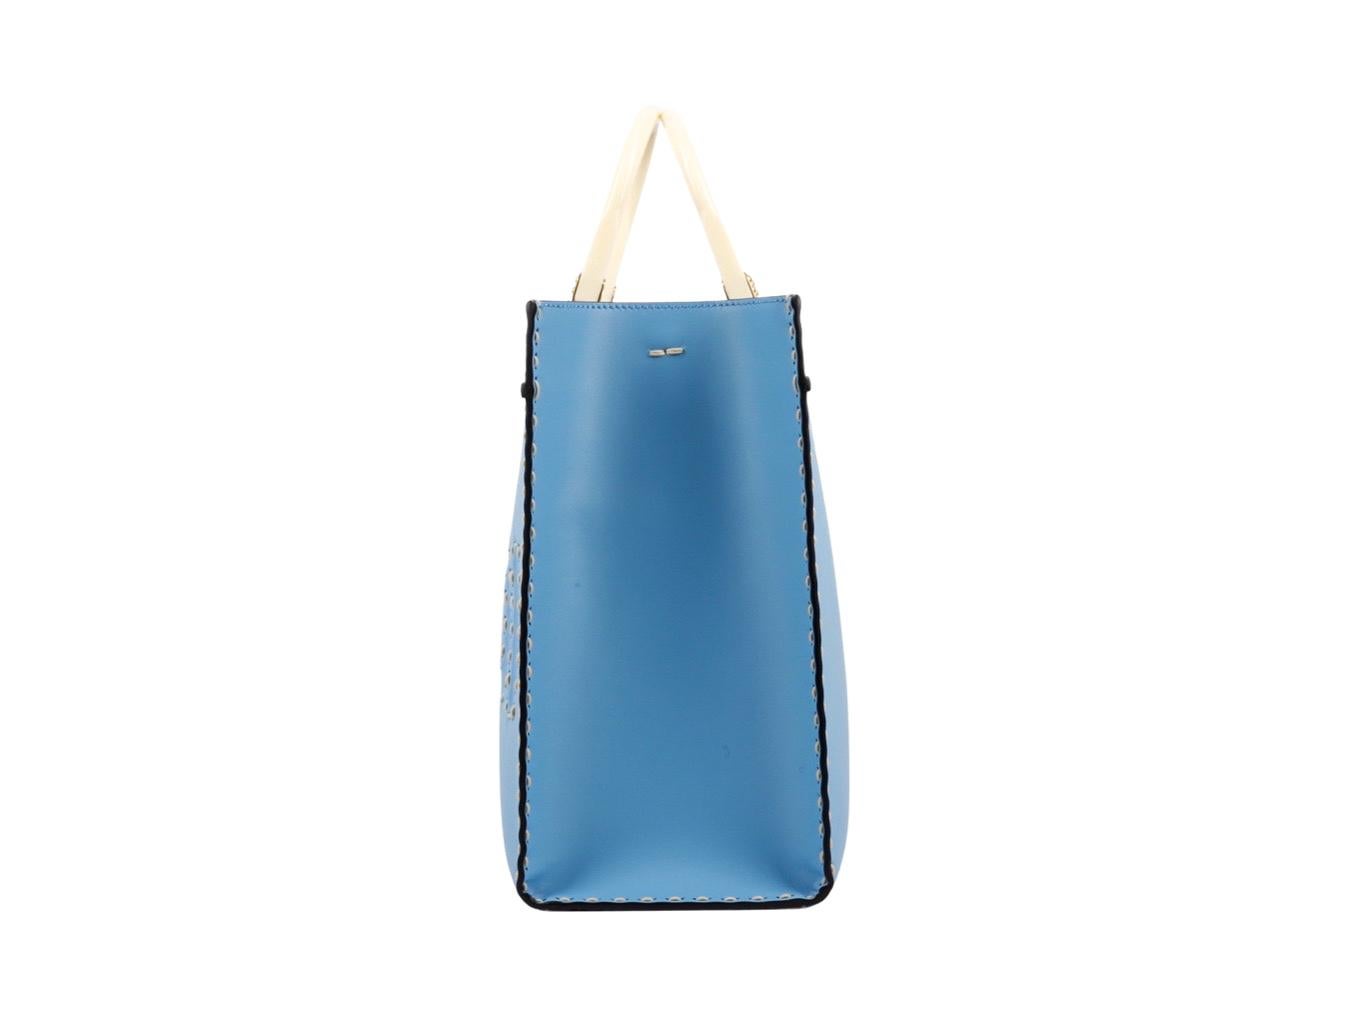 Womens Designer FENDI SUNSHINE MEDIUM BLUE SHOPPER TOTE BAG For Sale 1